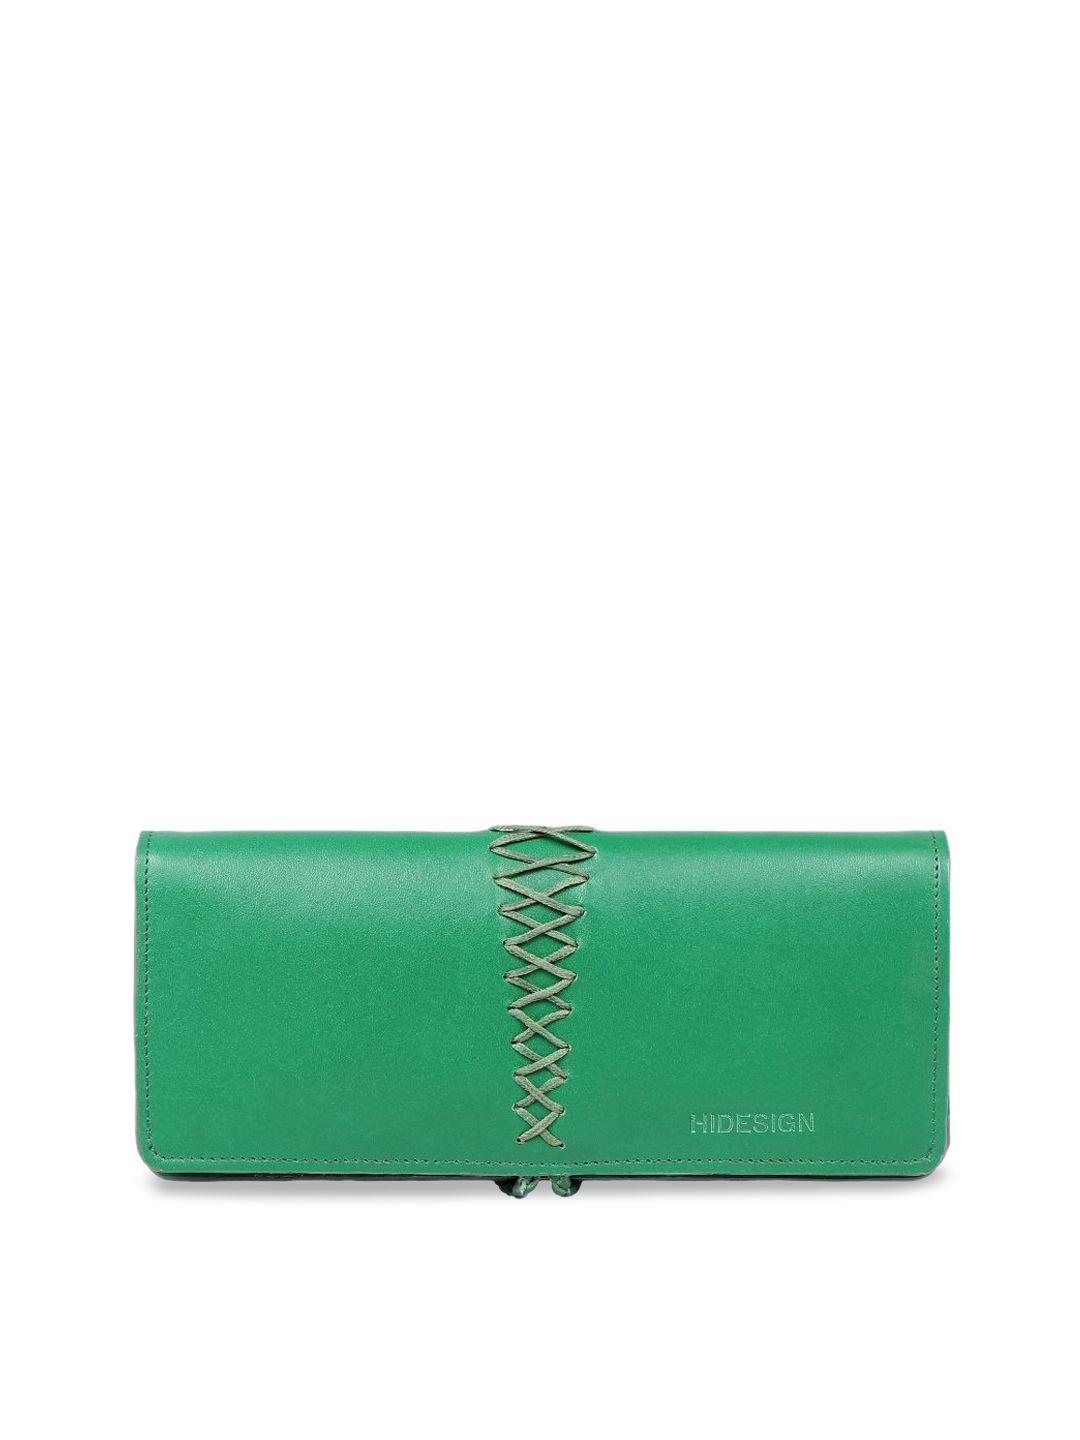 hidesign-women-green-leather-two-fold-wallet